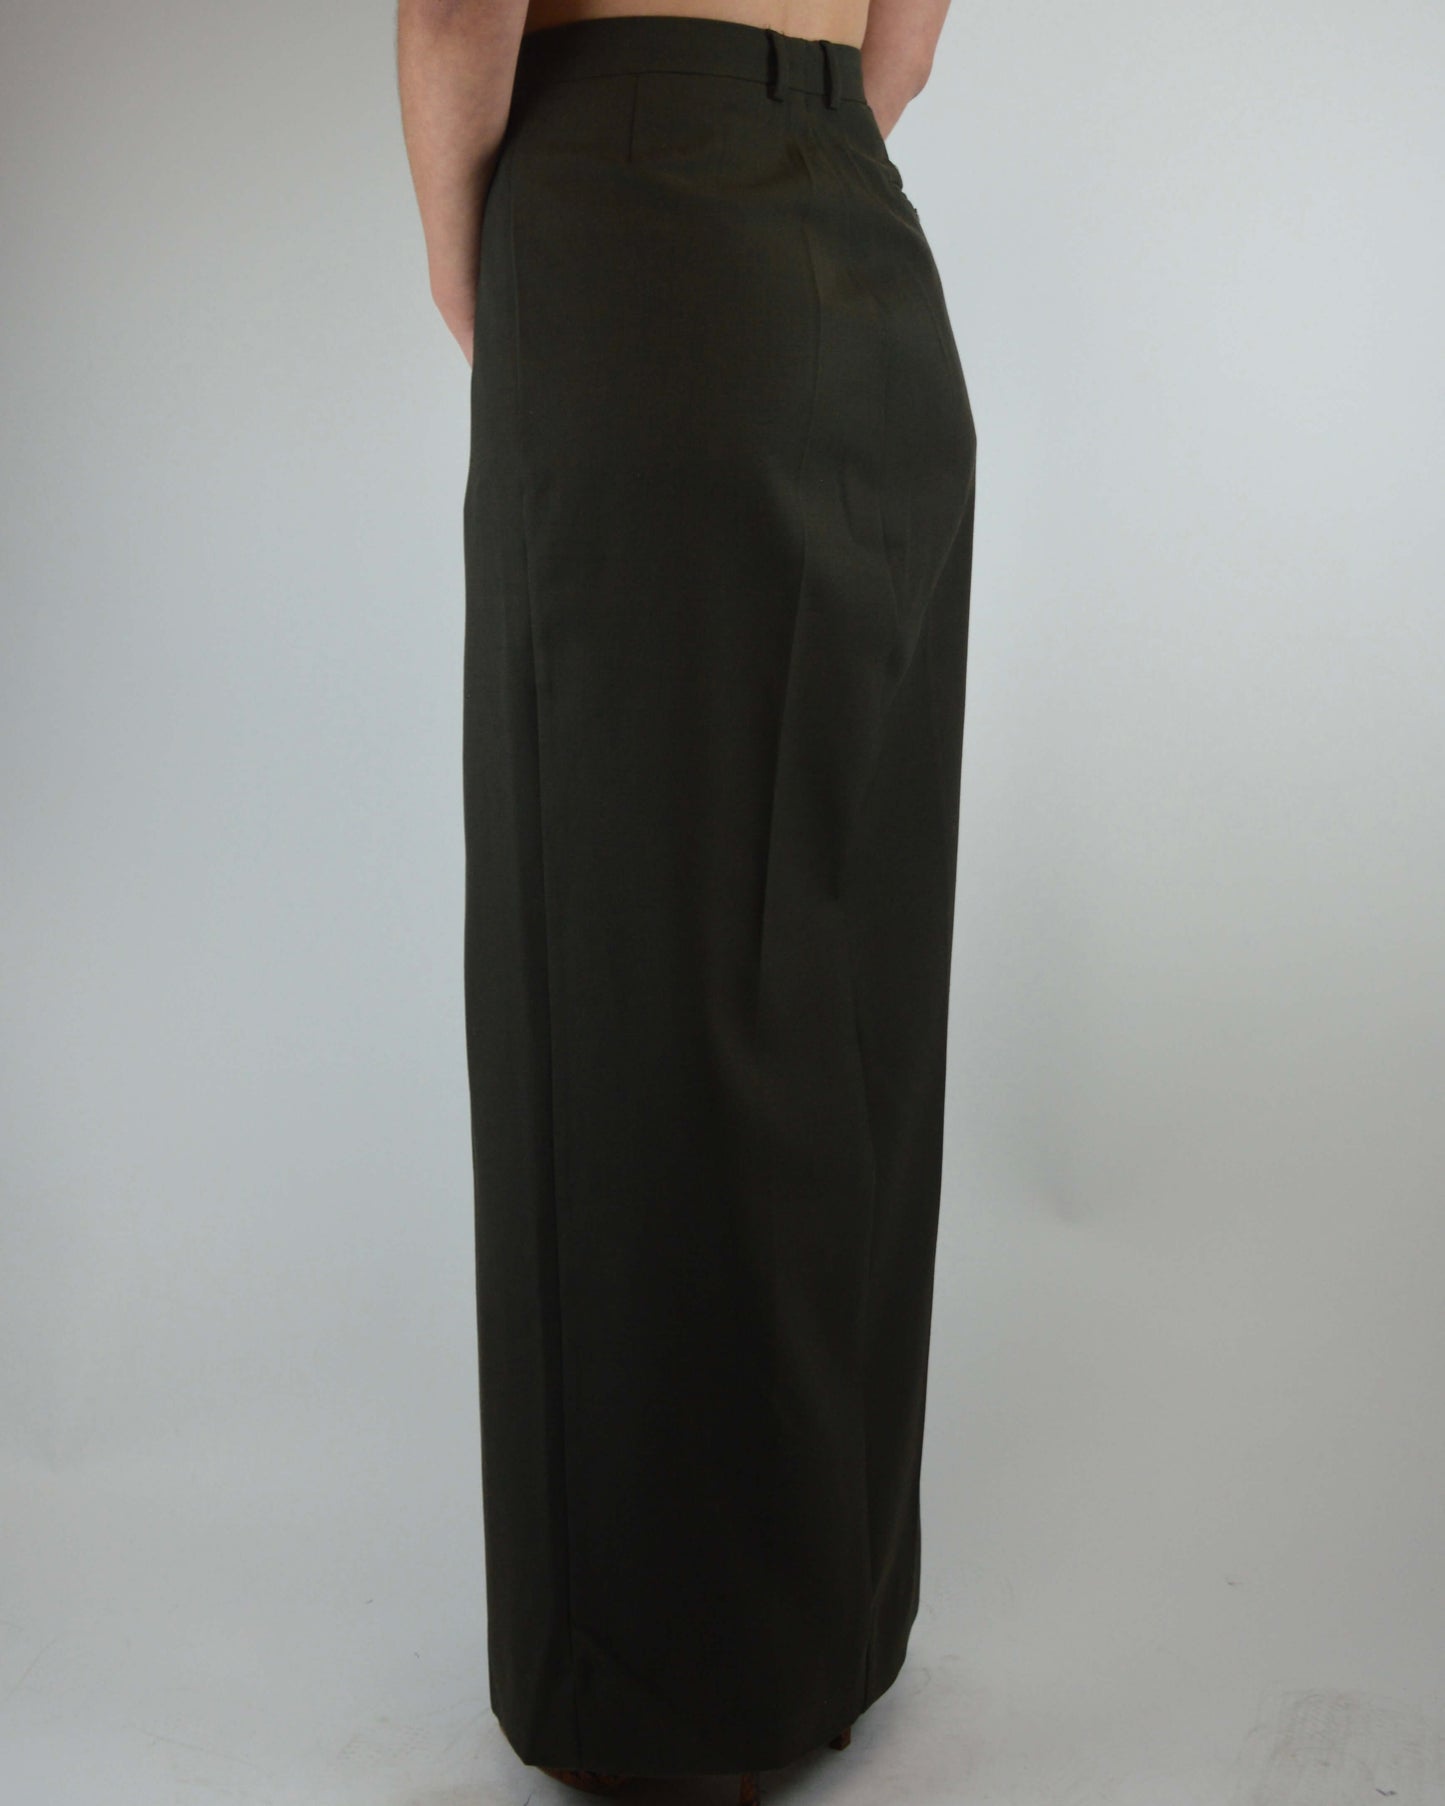 Long Skirt - Greenish (S/M)